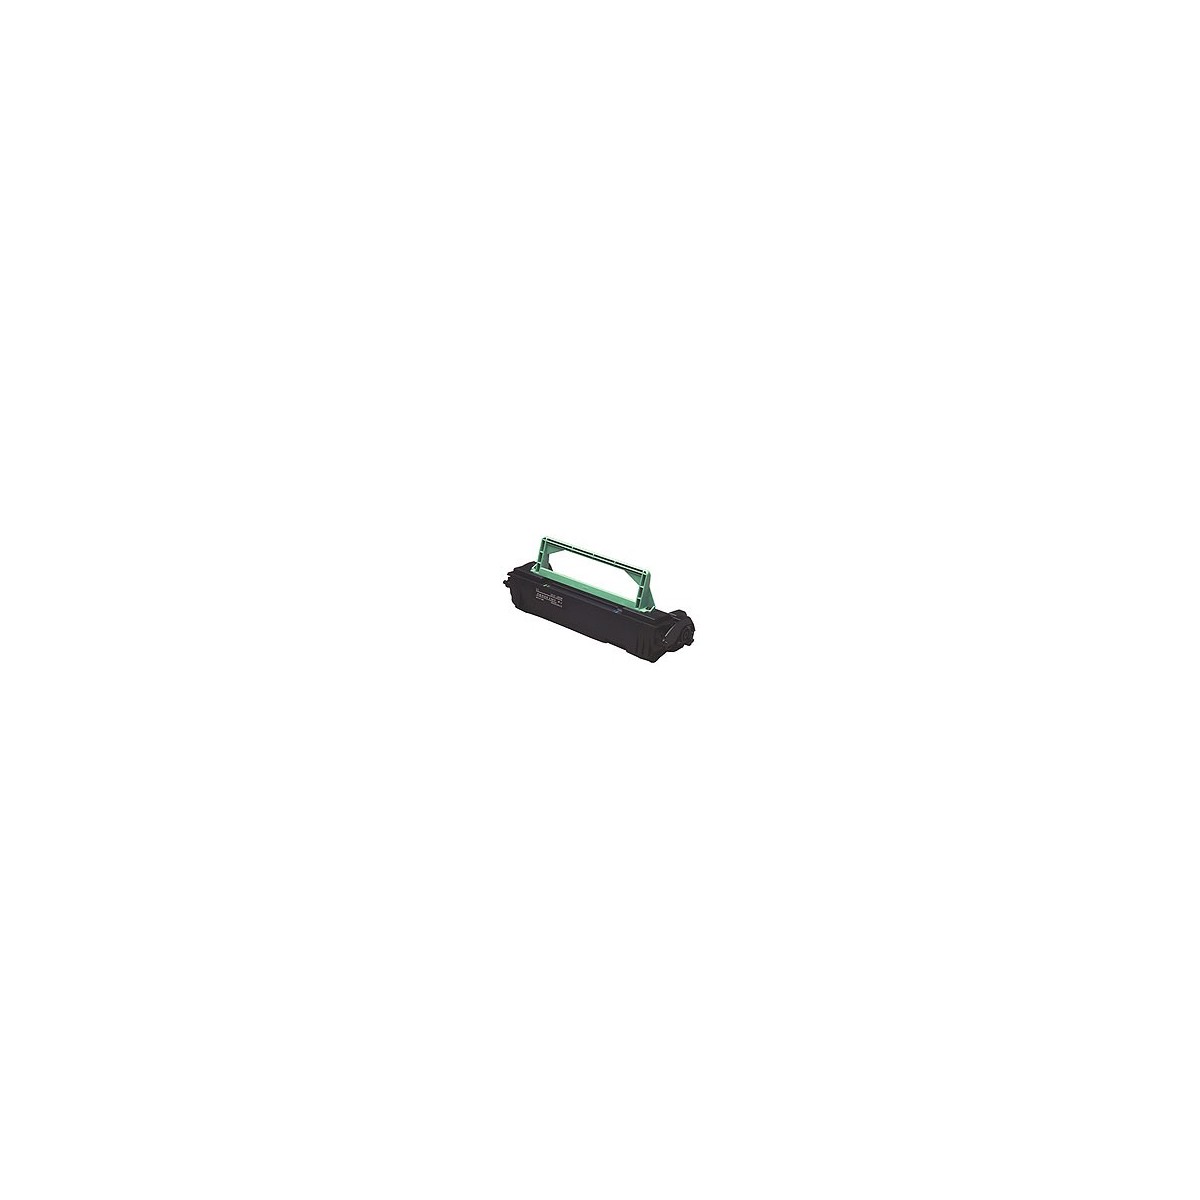 Konica Minolta toner cartridge high capacity - 6000 pages - Black